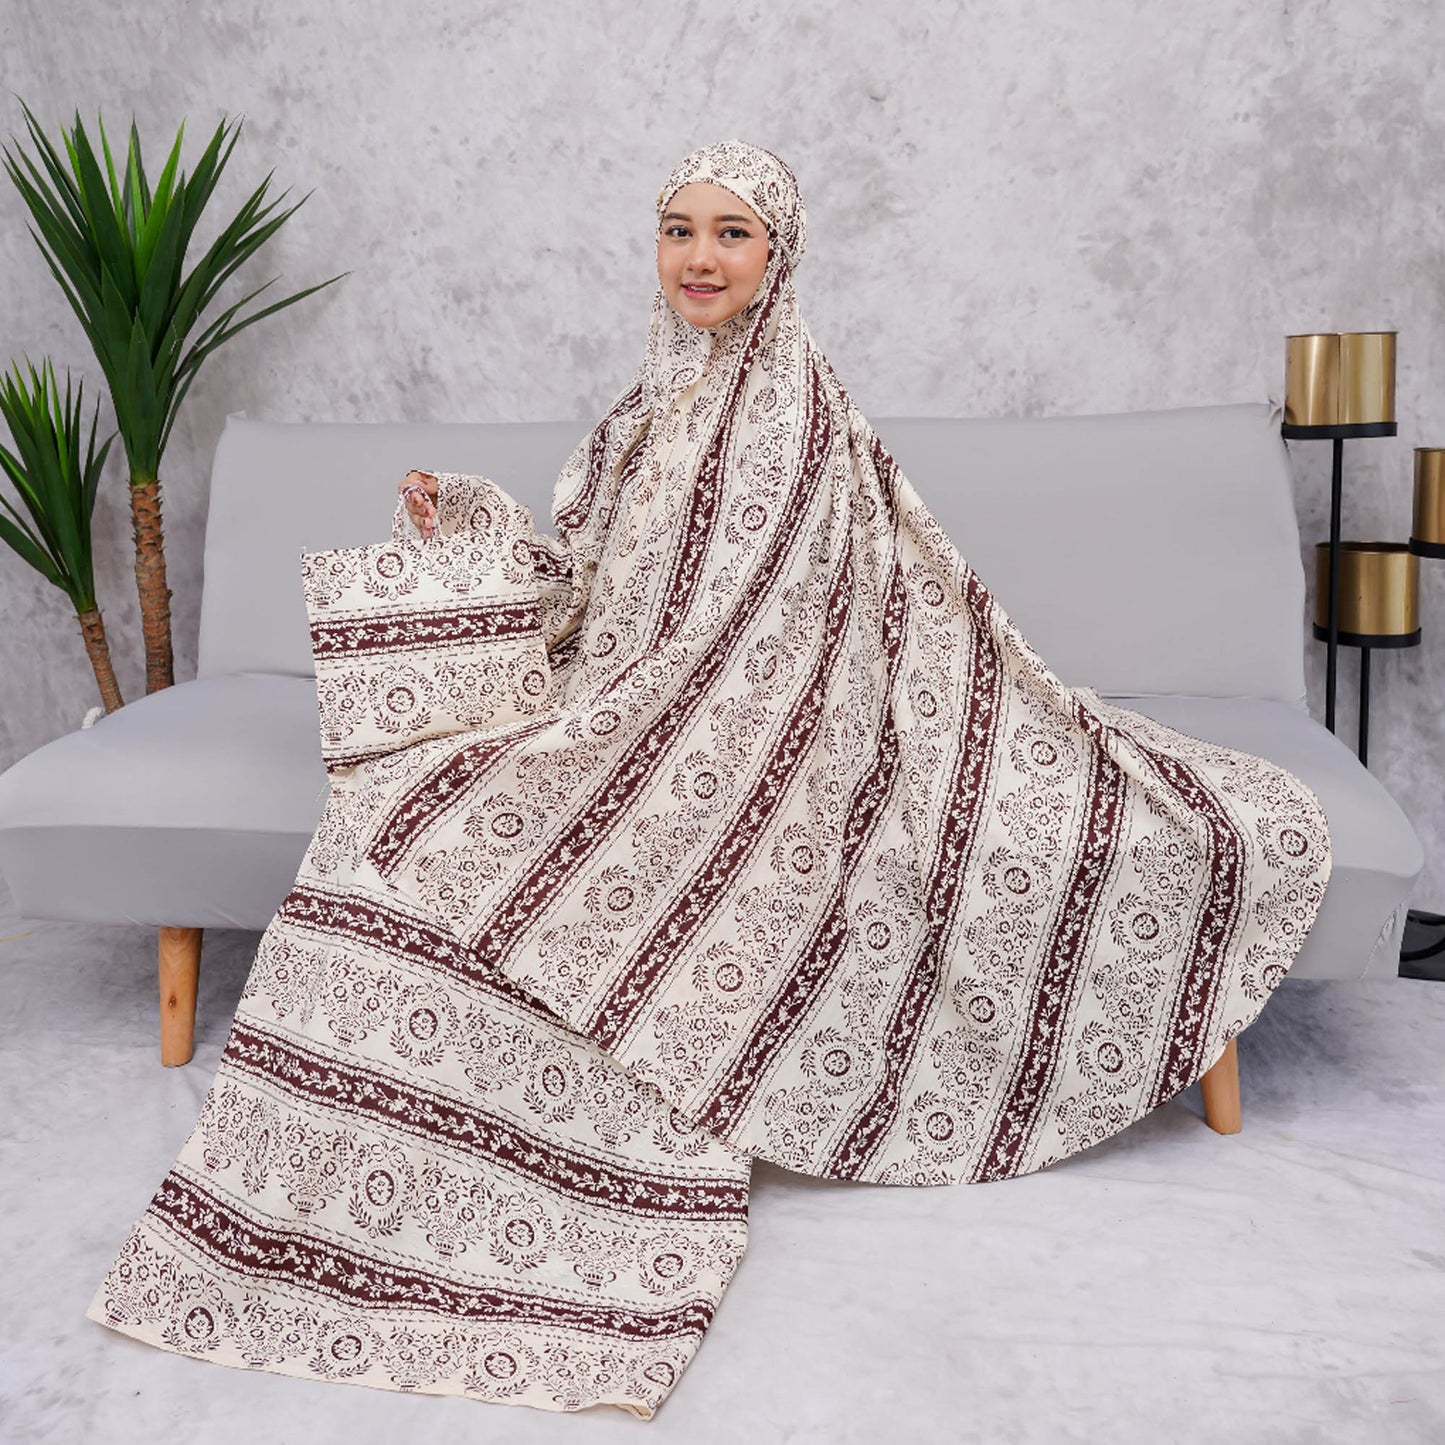 ZHAFIRA Variation Adult Mukena: The Right Choice for a Different Look, Muslim prayer outfit, Gamis dress, Prayer dress women, Jilbab dress